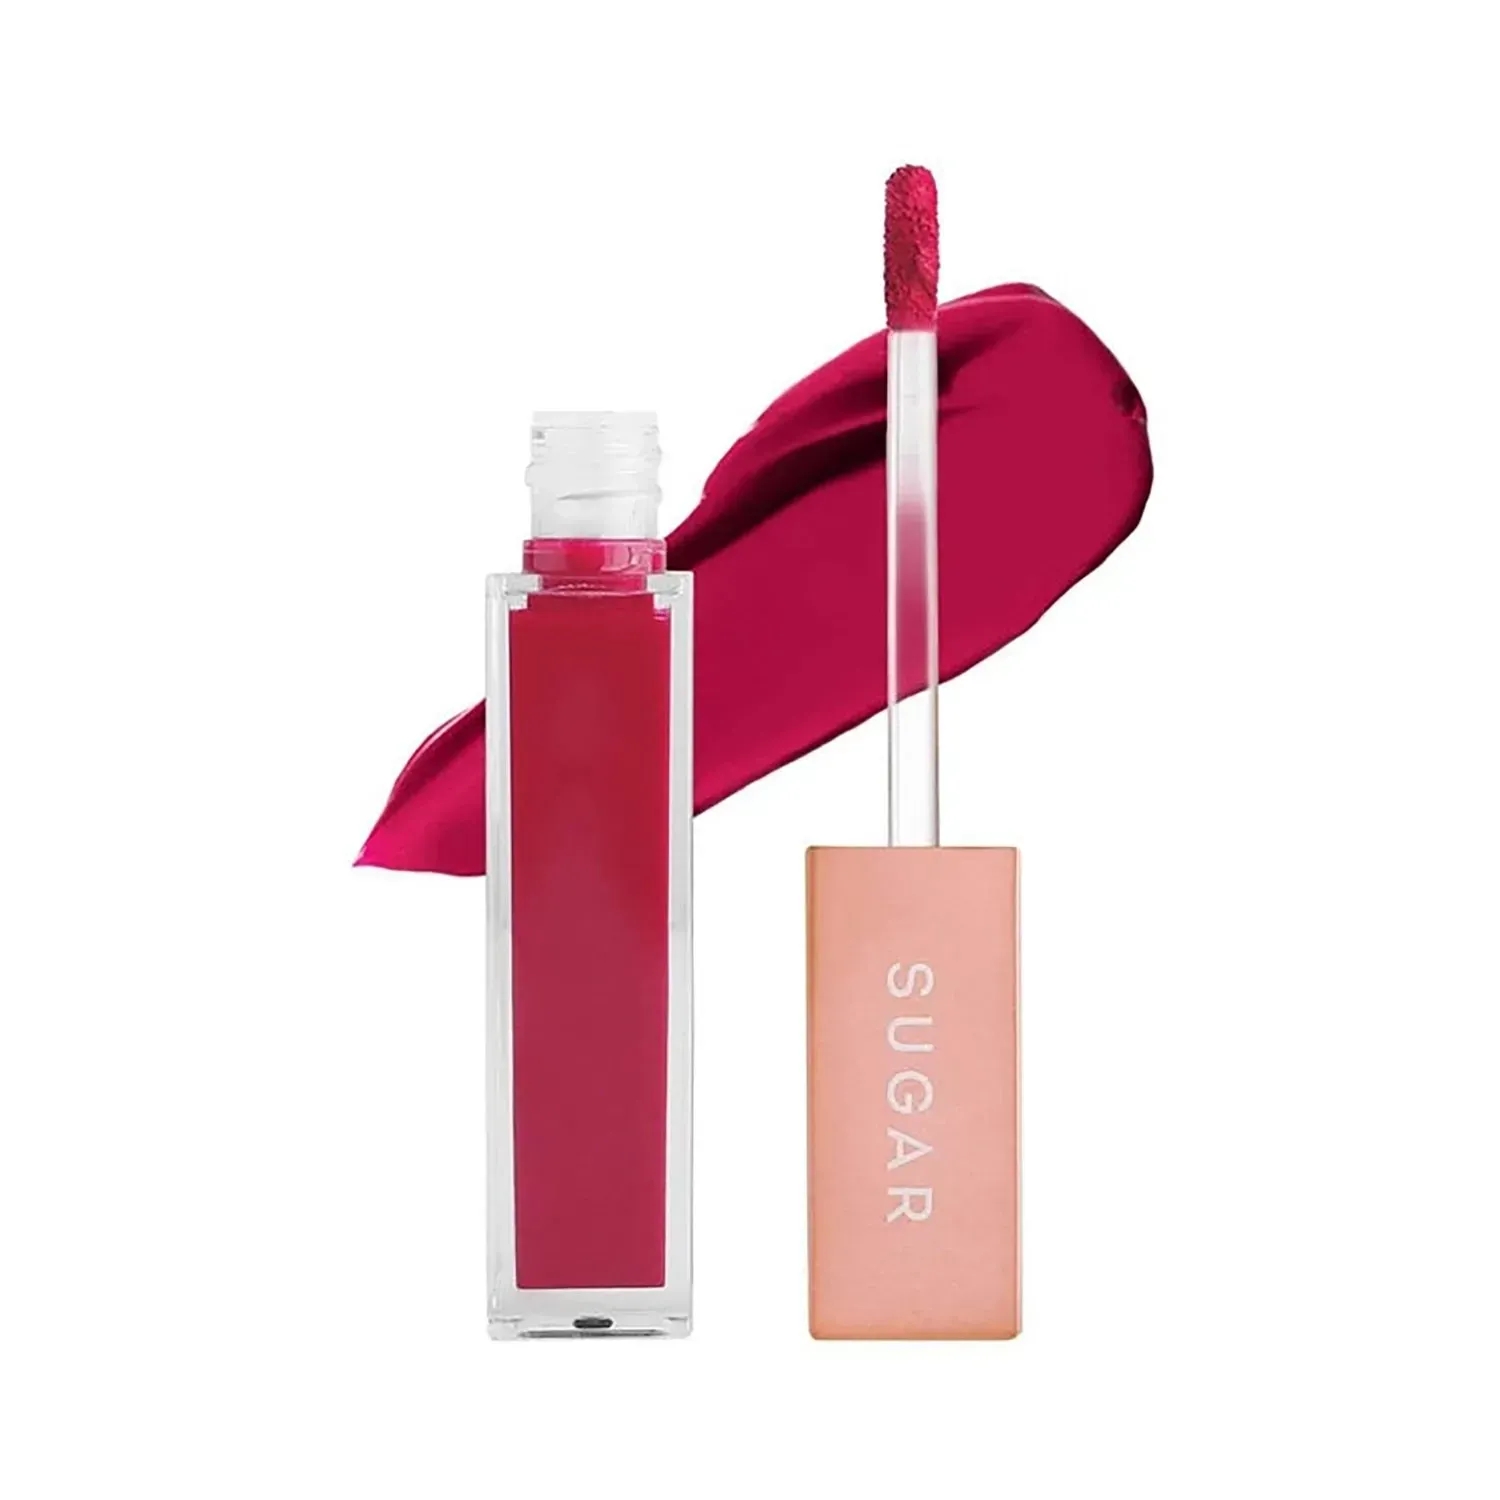 SUGAR Cosmetics Mettle Liquid Lipstick - 12 Talitha (Bright Magenta with Red Undertones) (7ml)